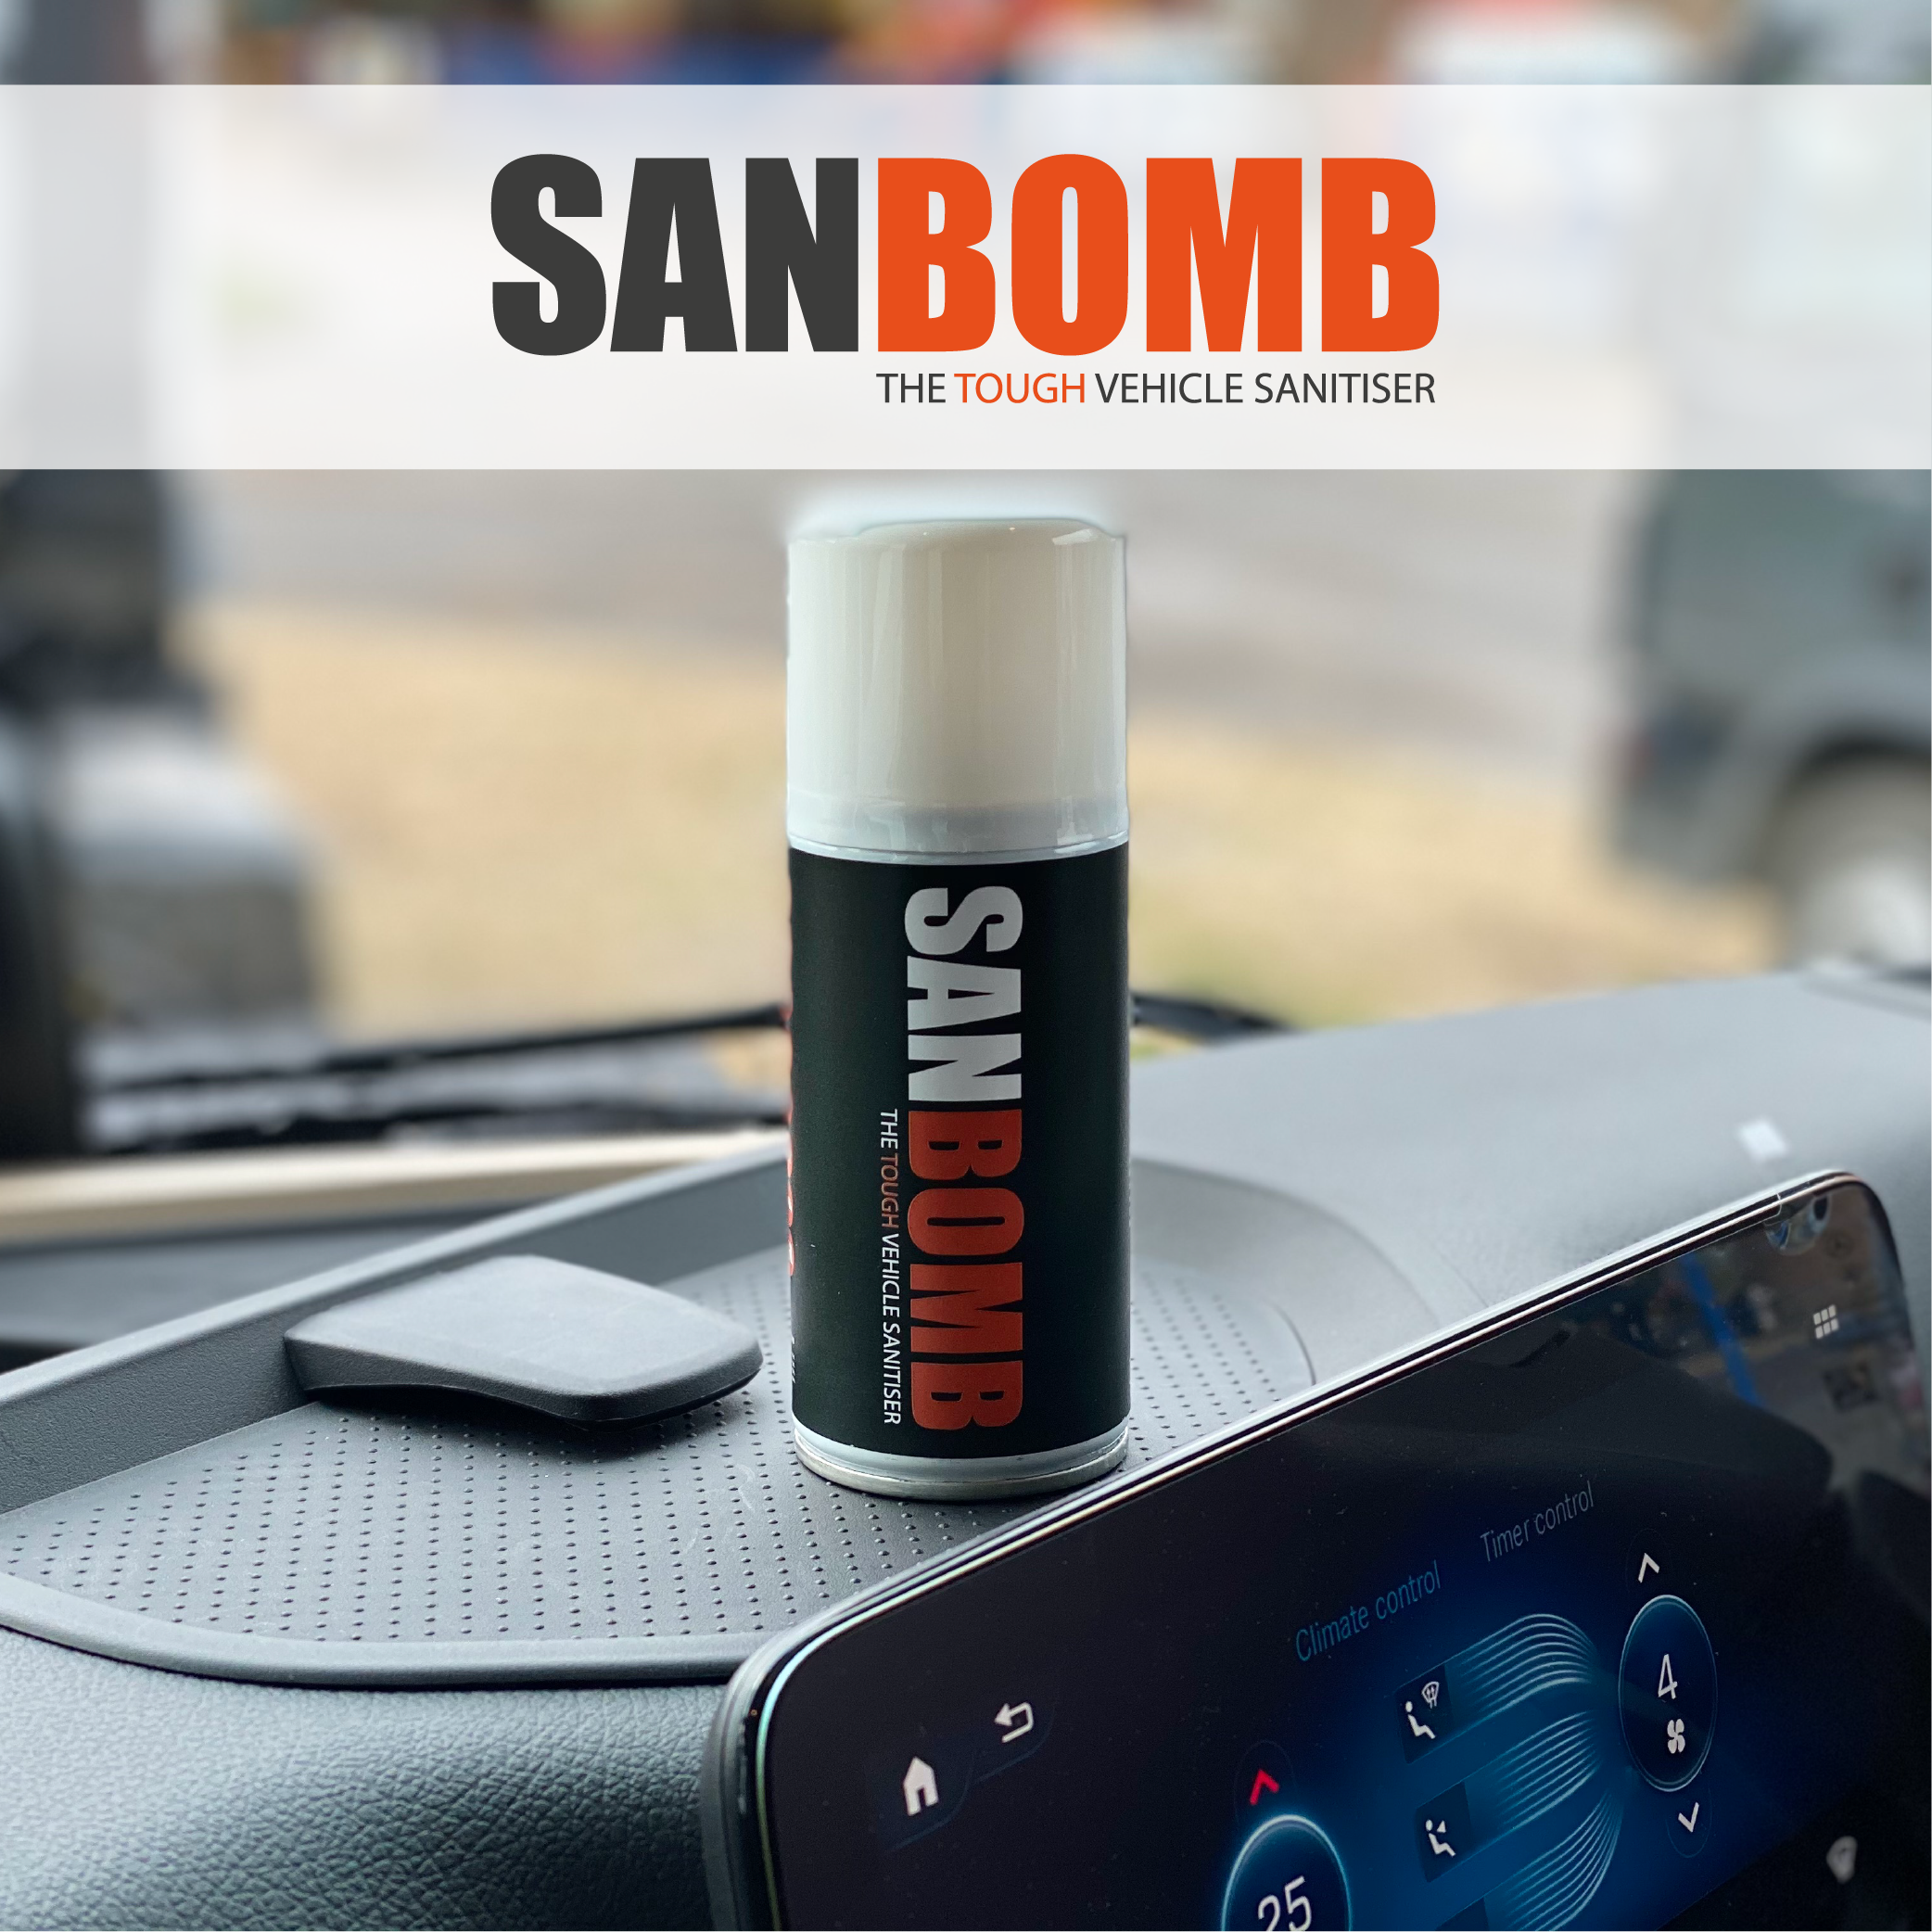 Image of SanBomb - The tough vehicle sanitiser